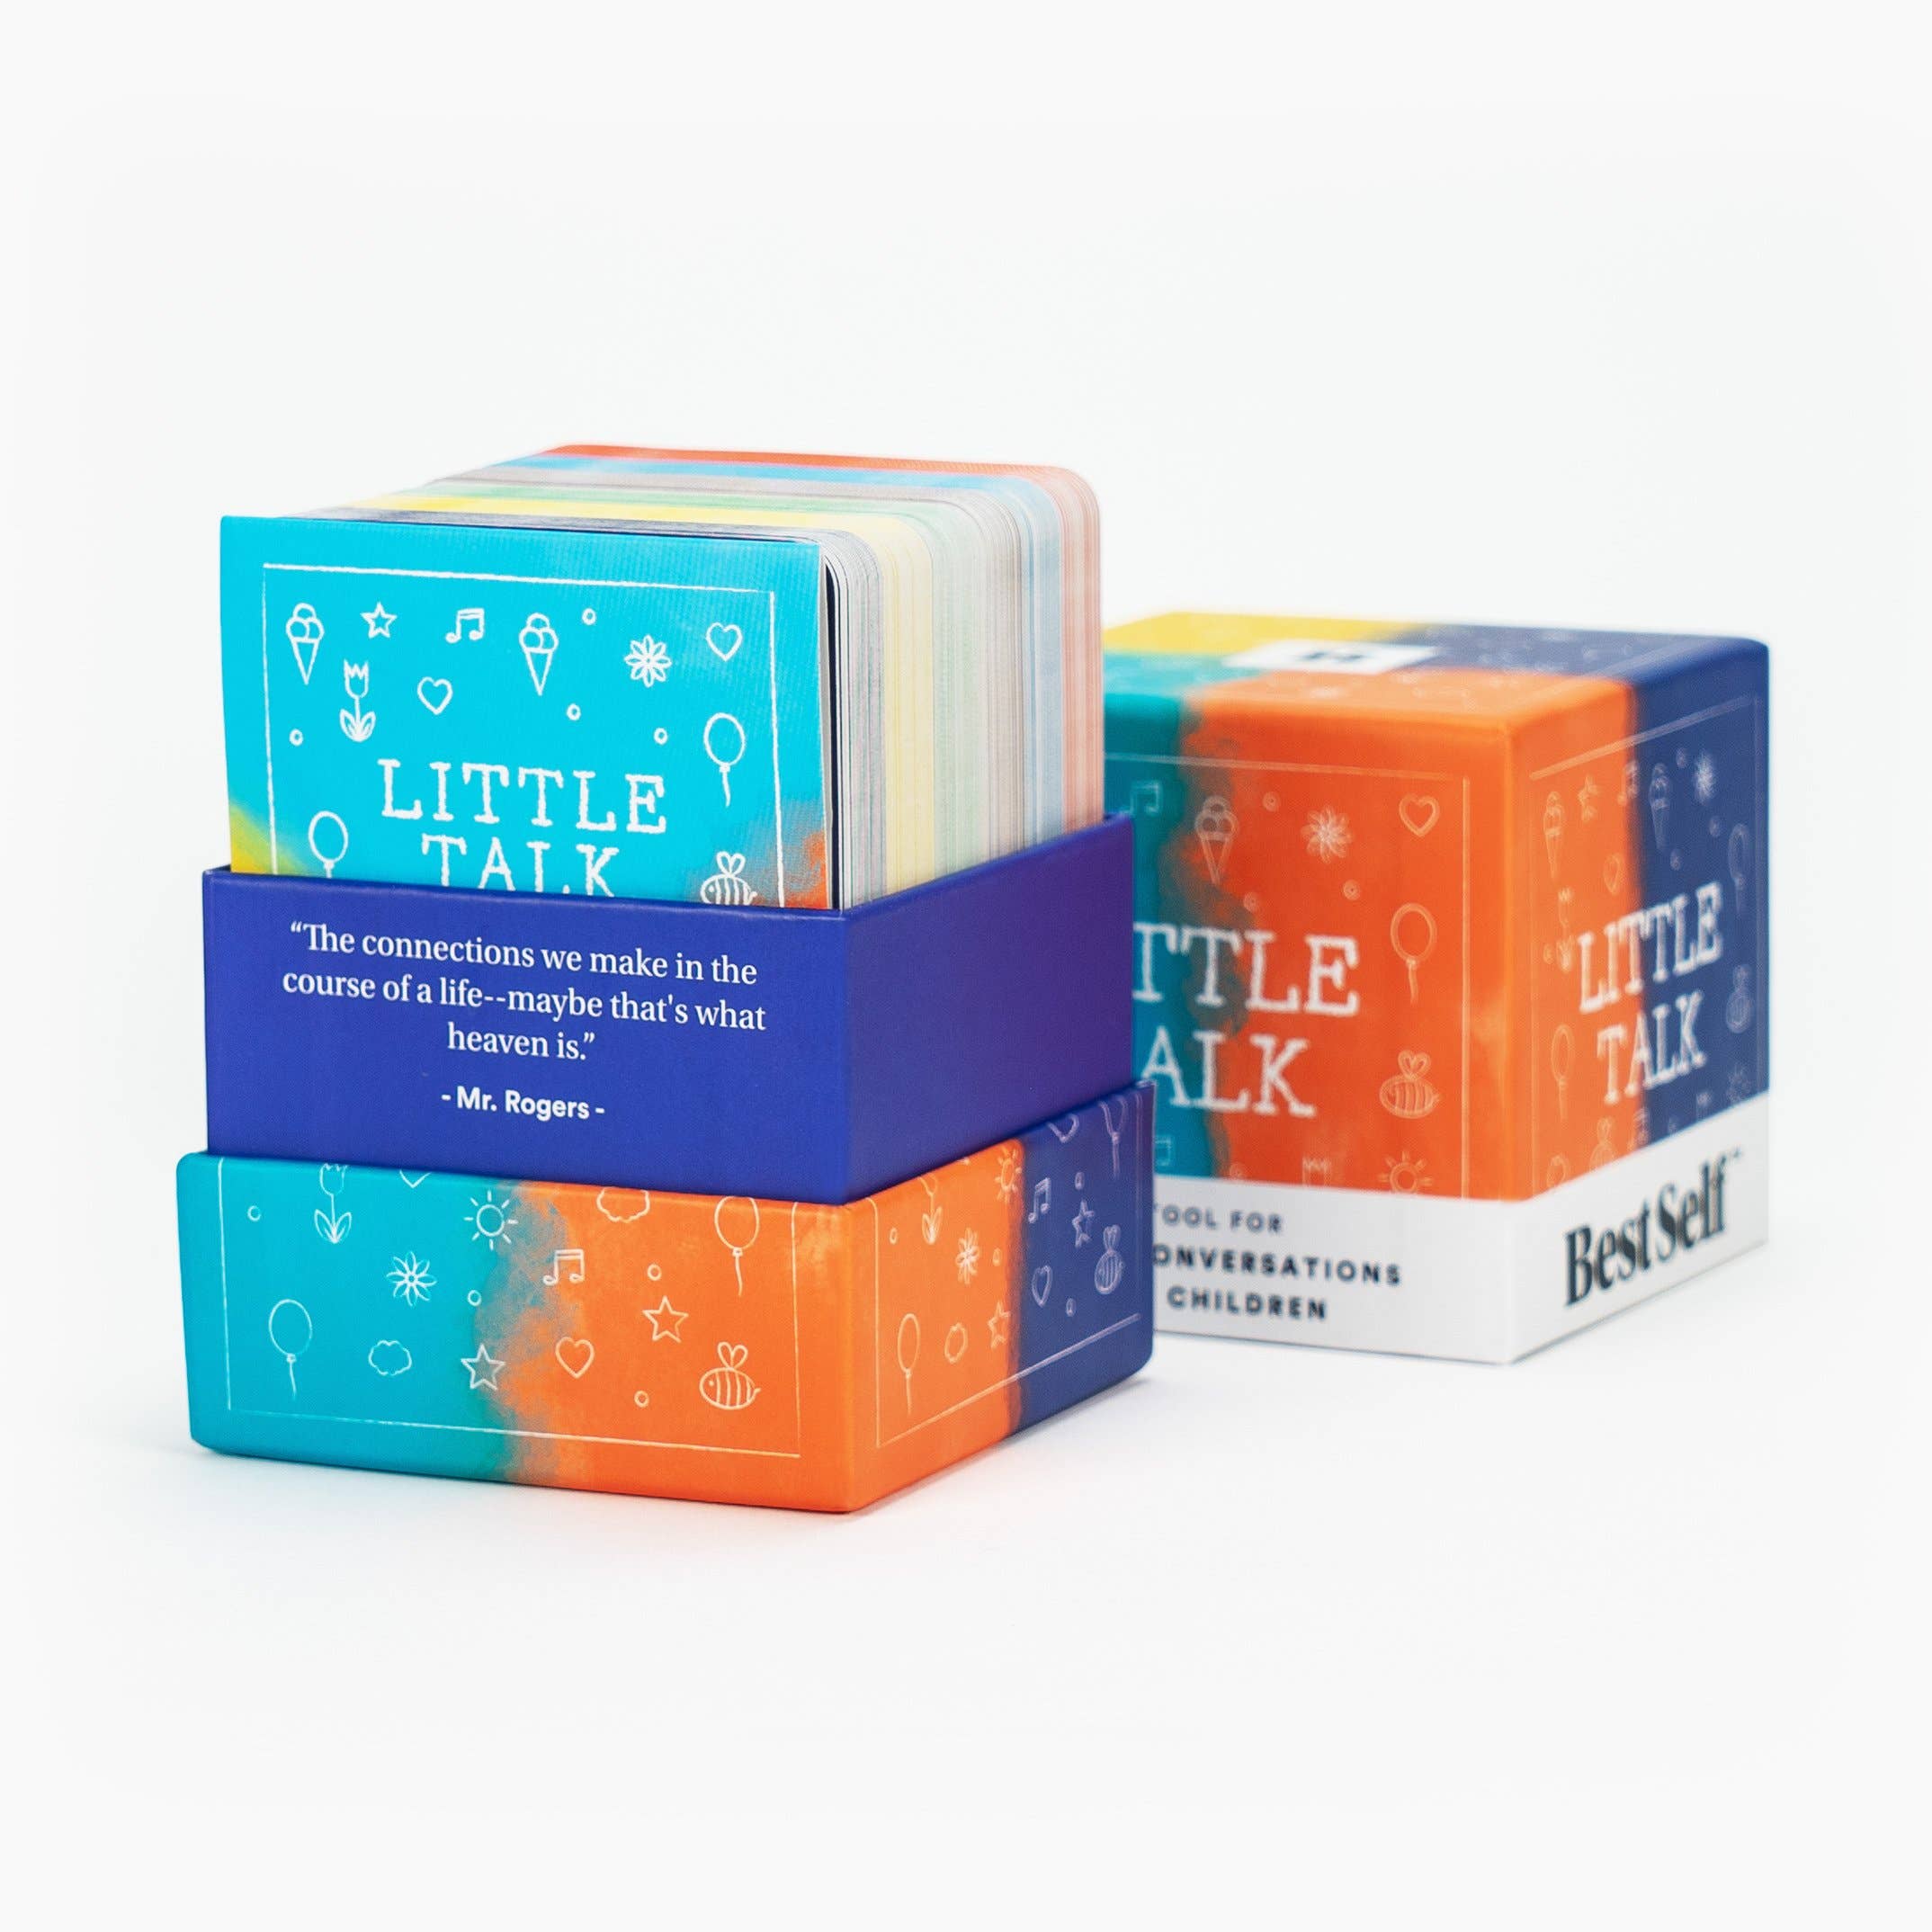 Little Talk Deck - 150 Conversation Card Deck for Kids Games + Playing Cards